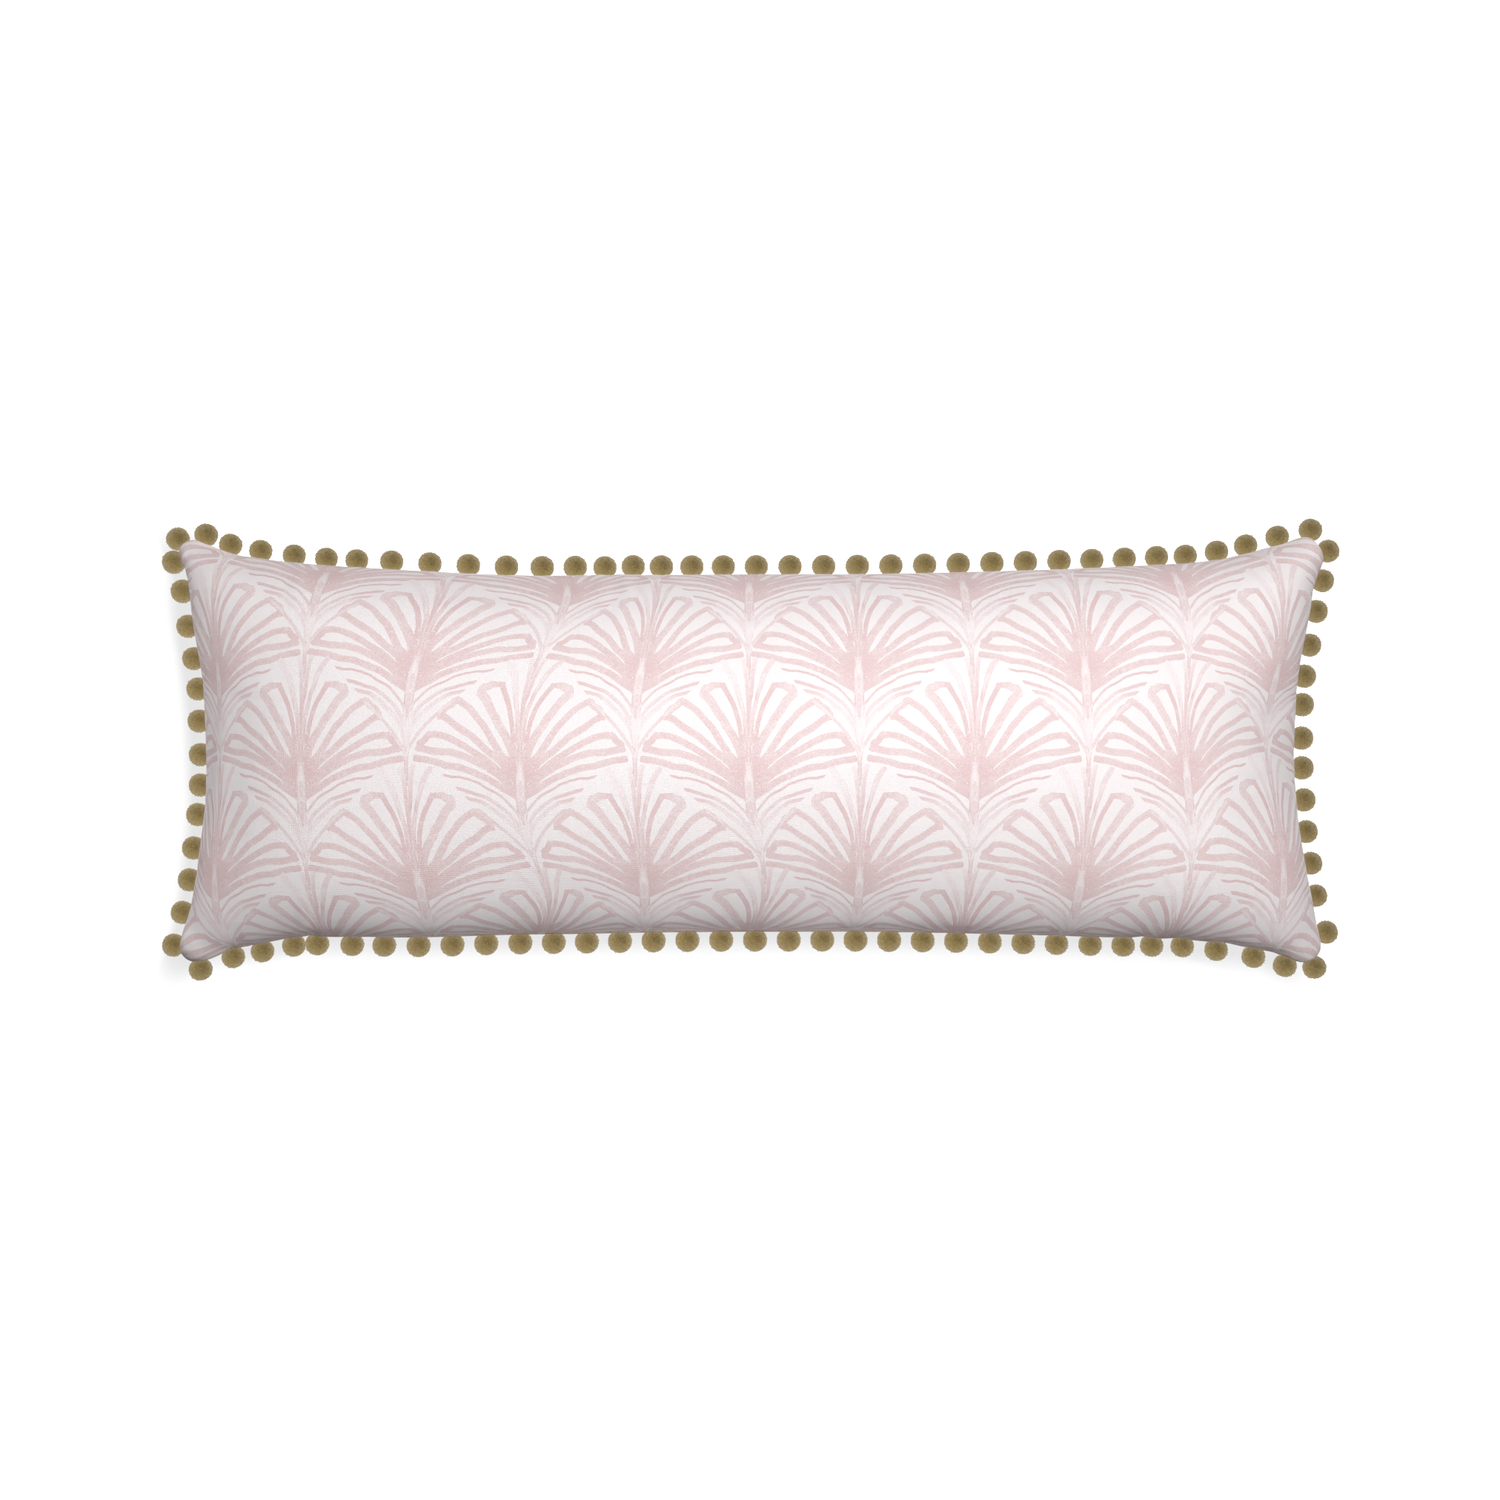 Xl-lumbar suzy rose custom pillow with olive pom pom on white background